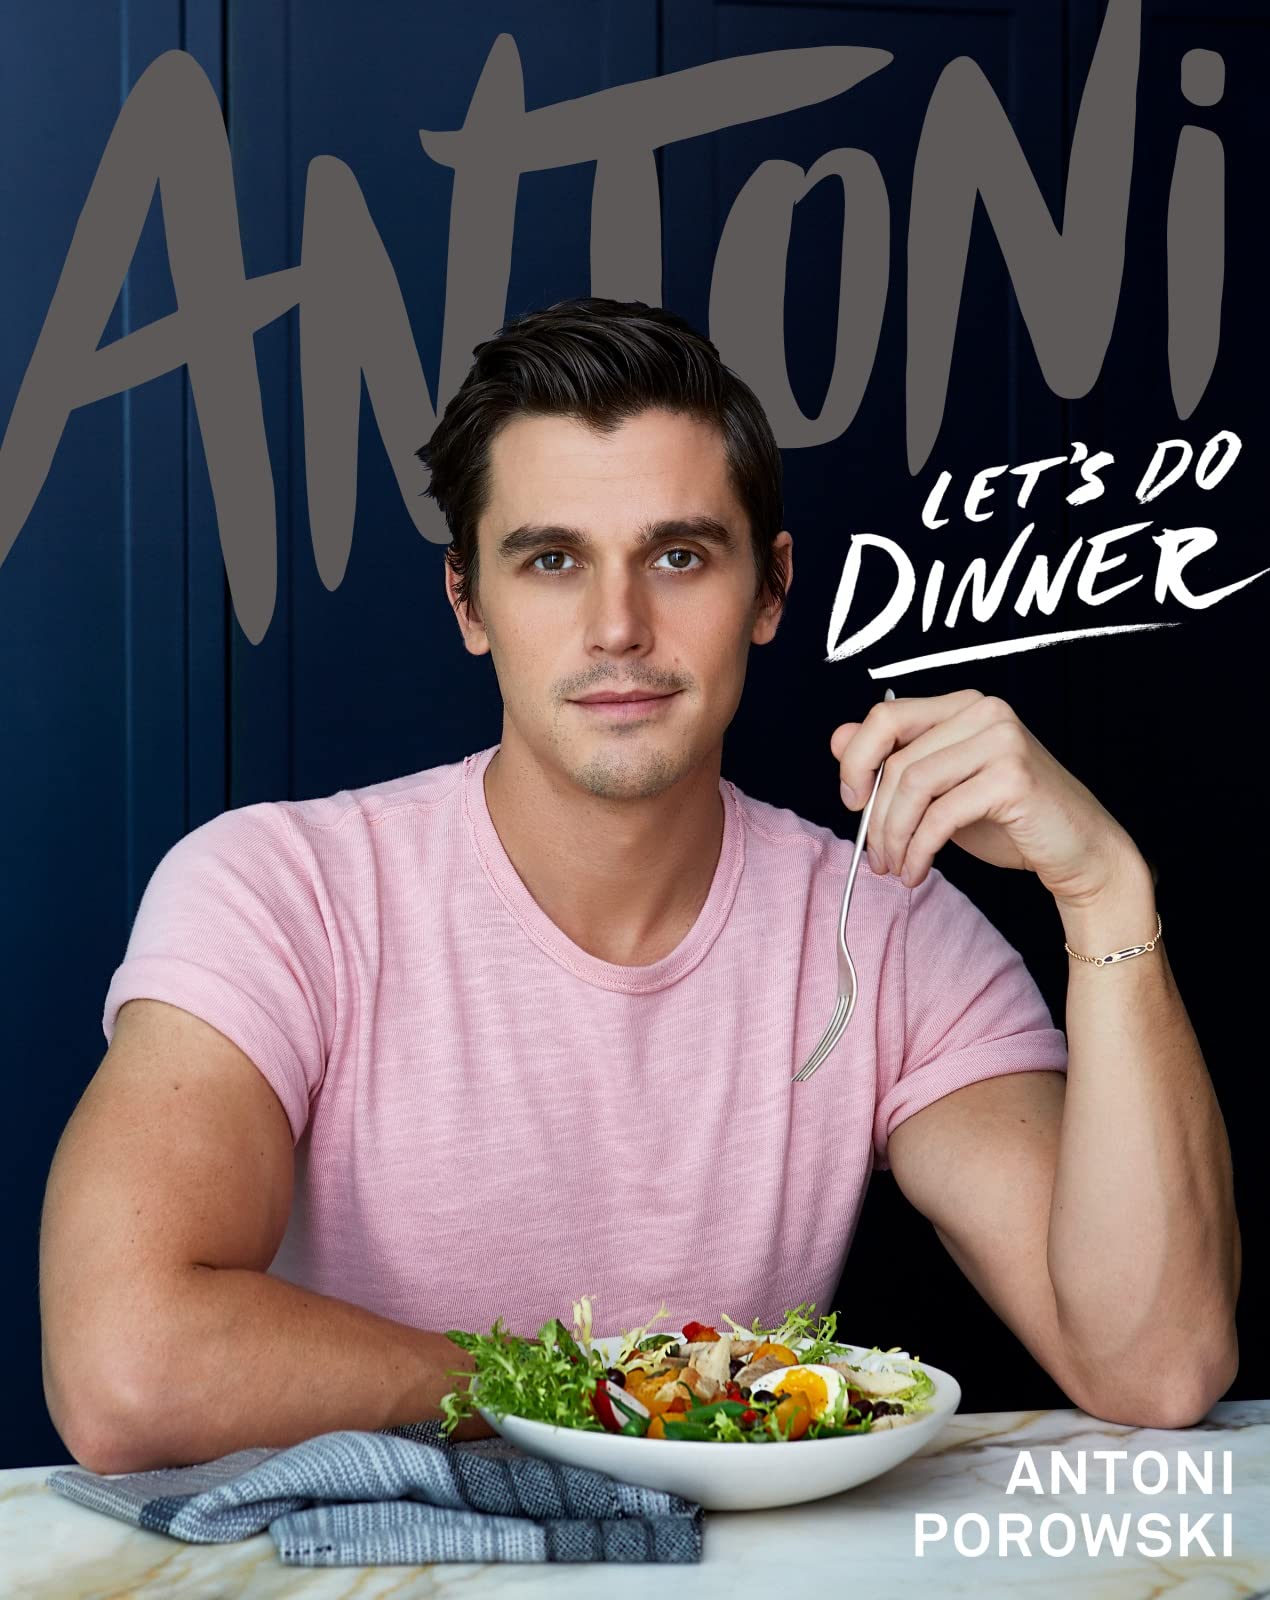 Antoni Let's Do Dinner book cover